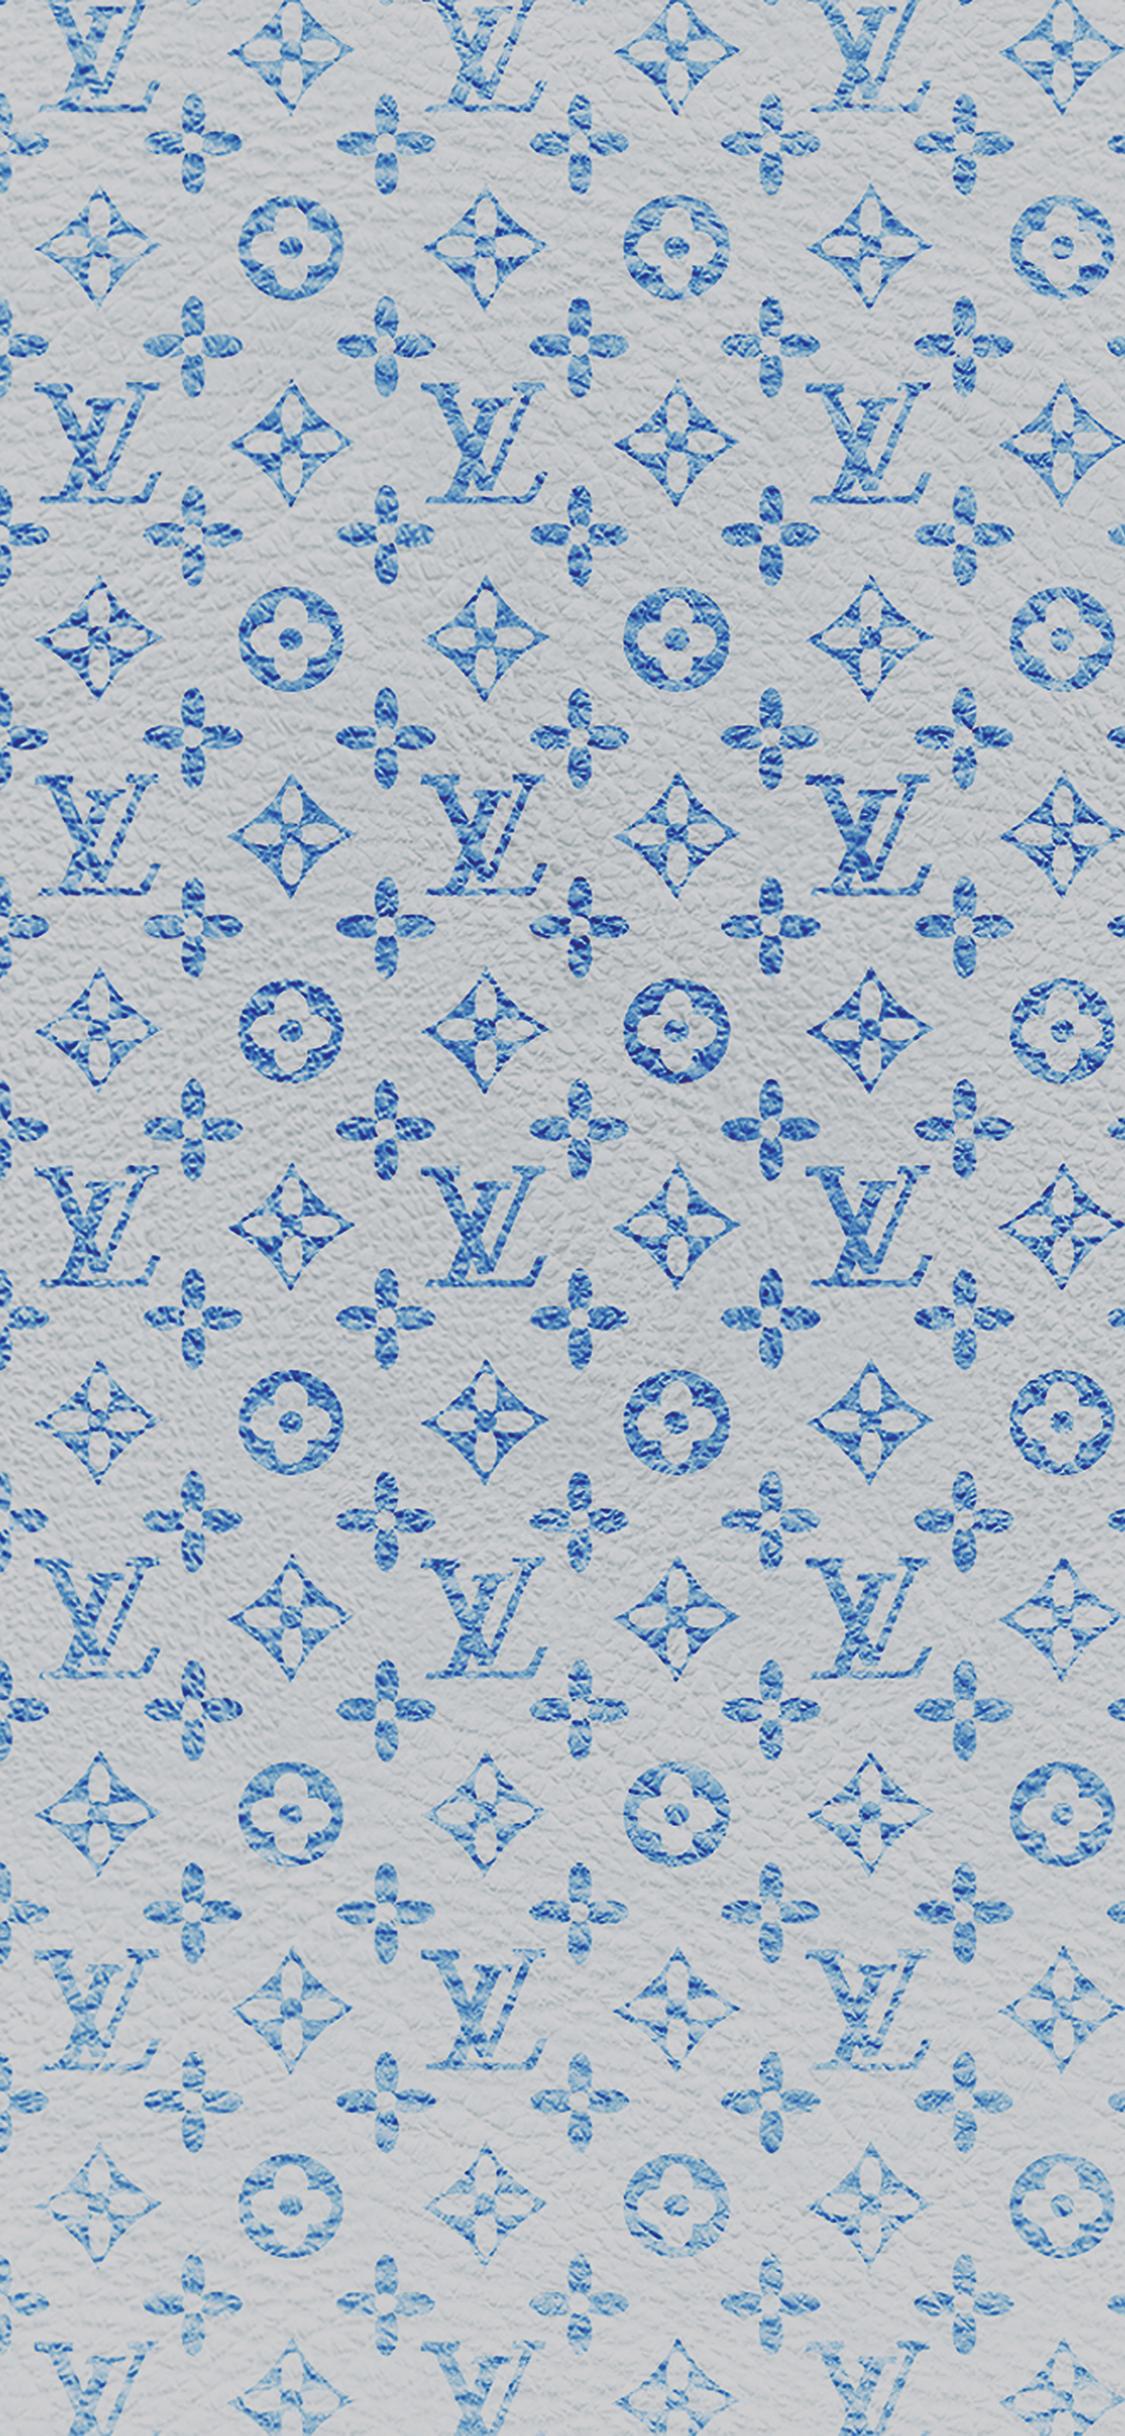 Louis Vuitton Wallpaper Iphone Aesthetician